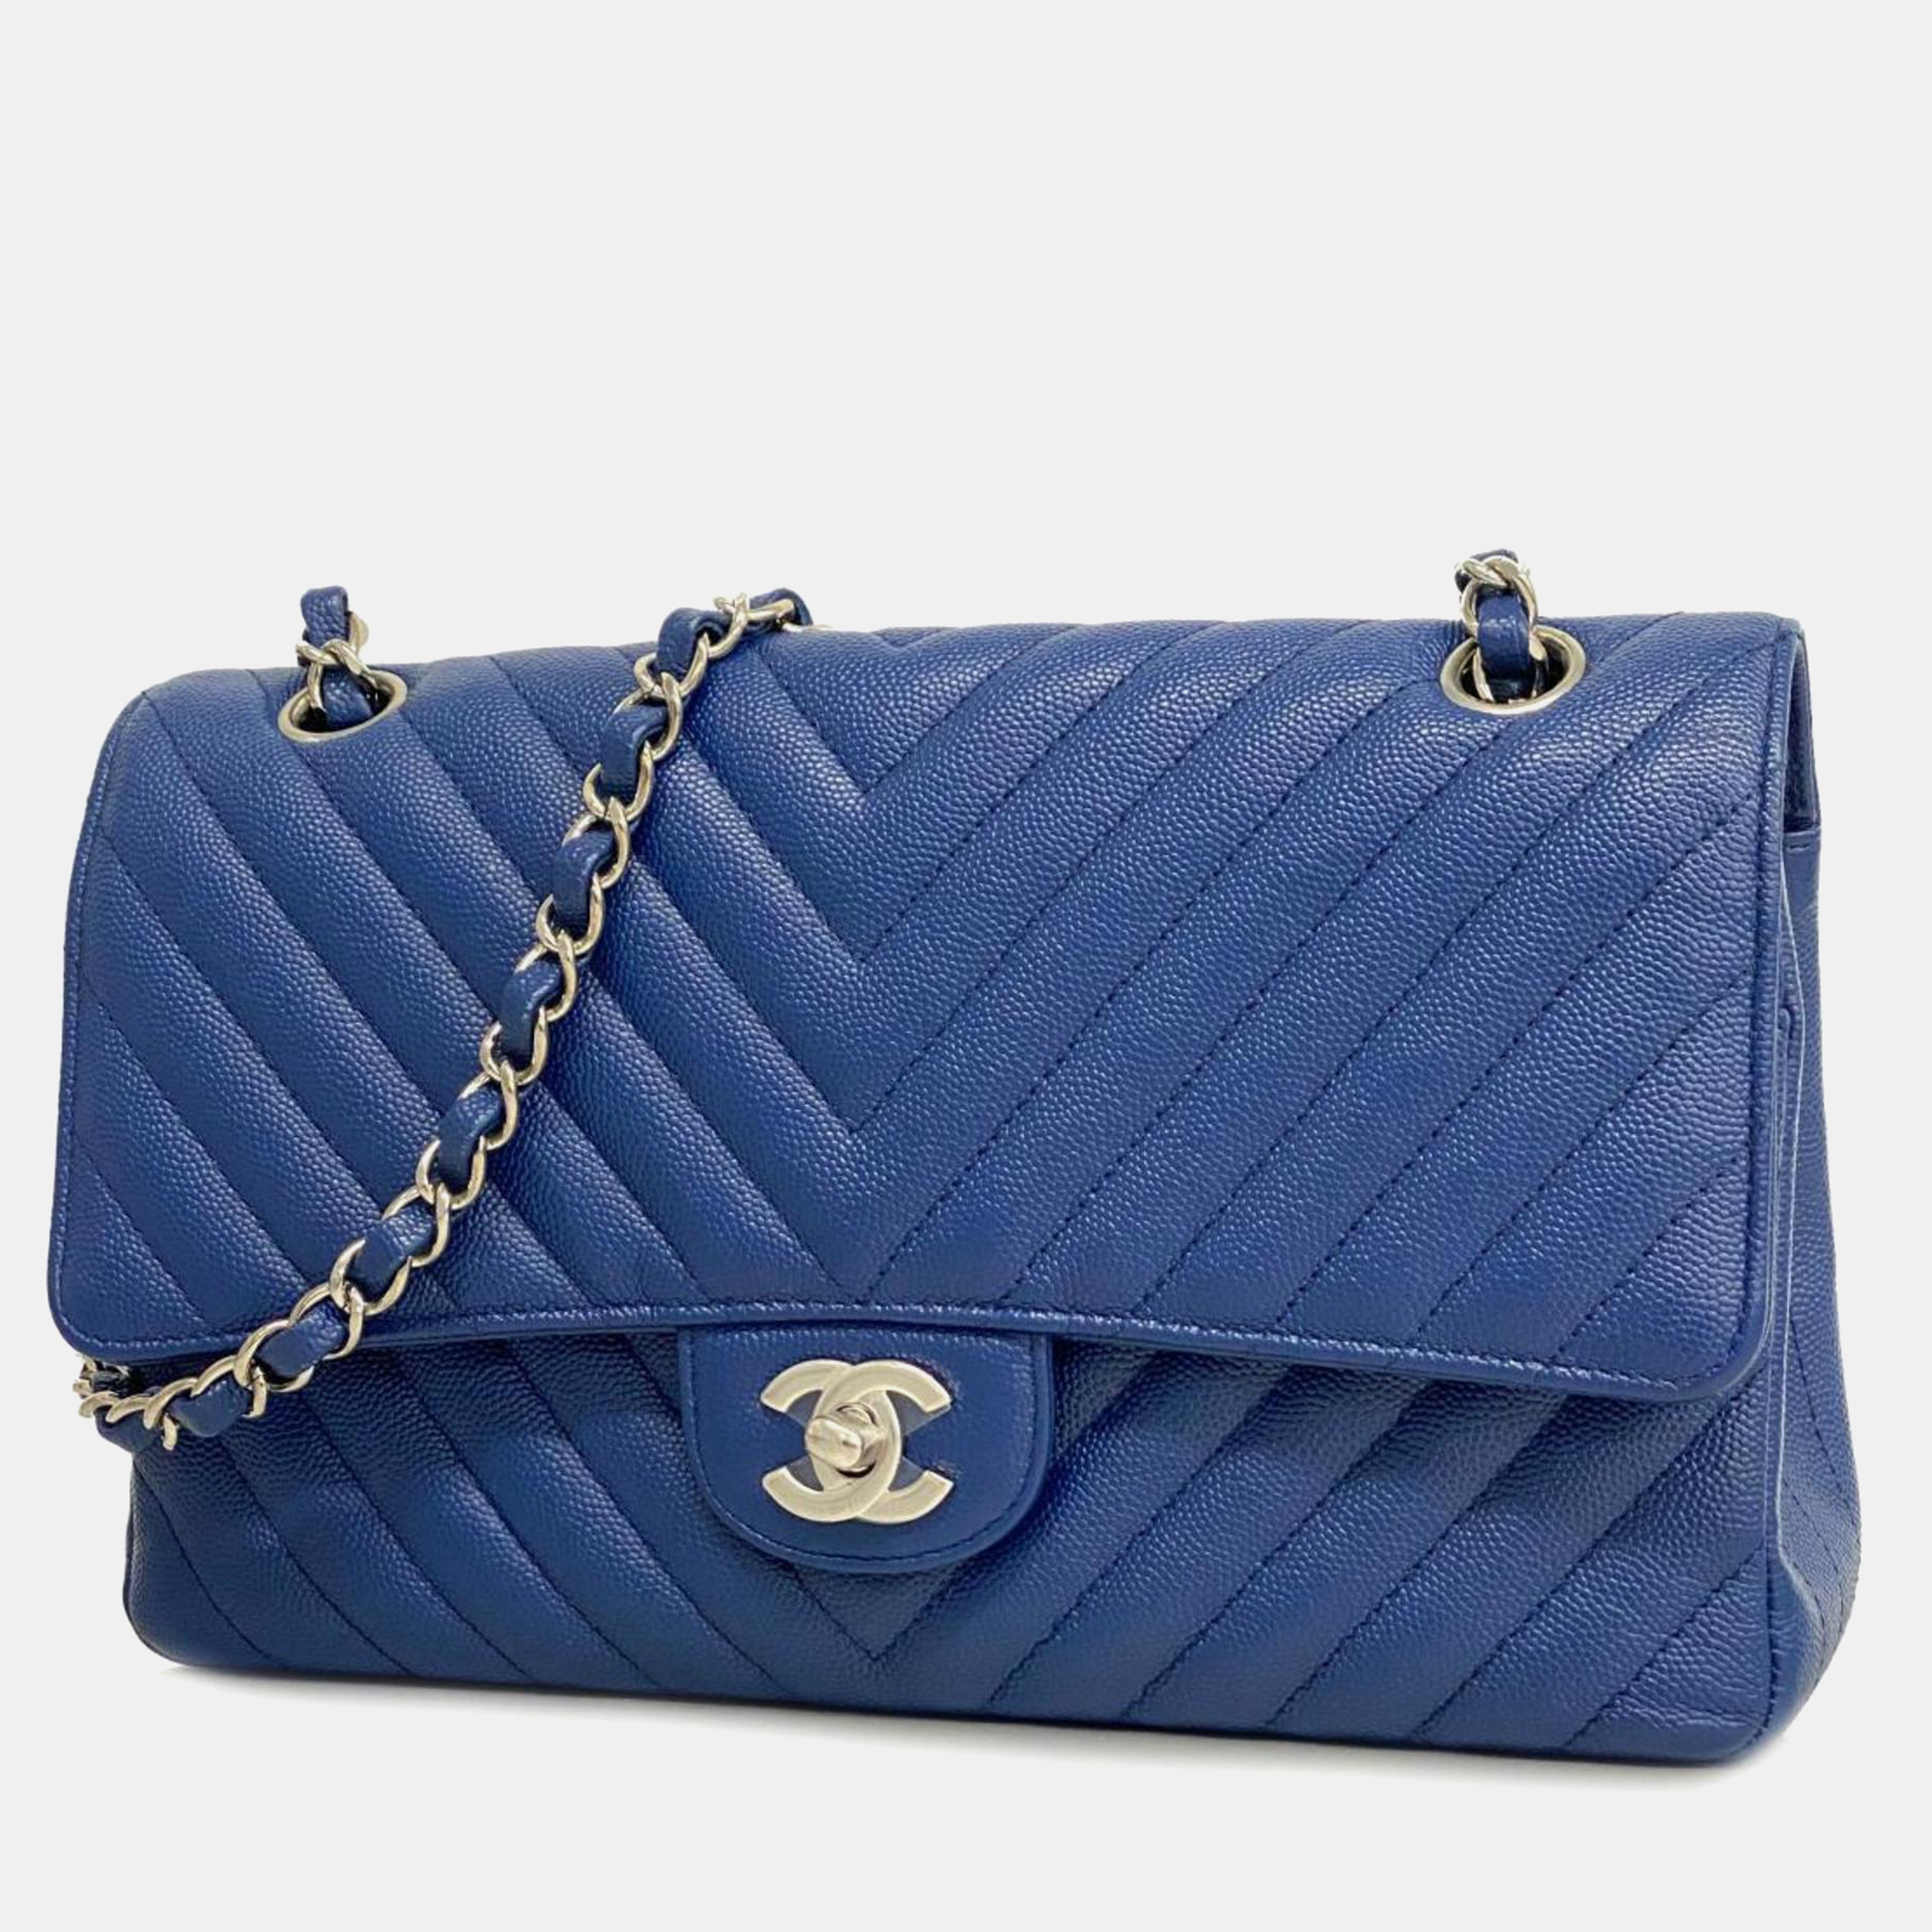 Chanel blue caviar leather medium classic double flap shoulder bags